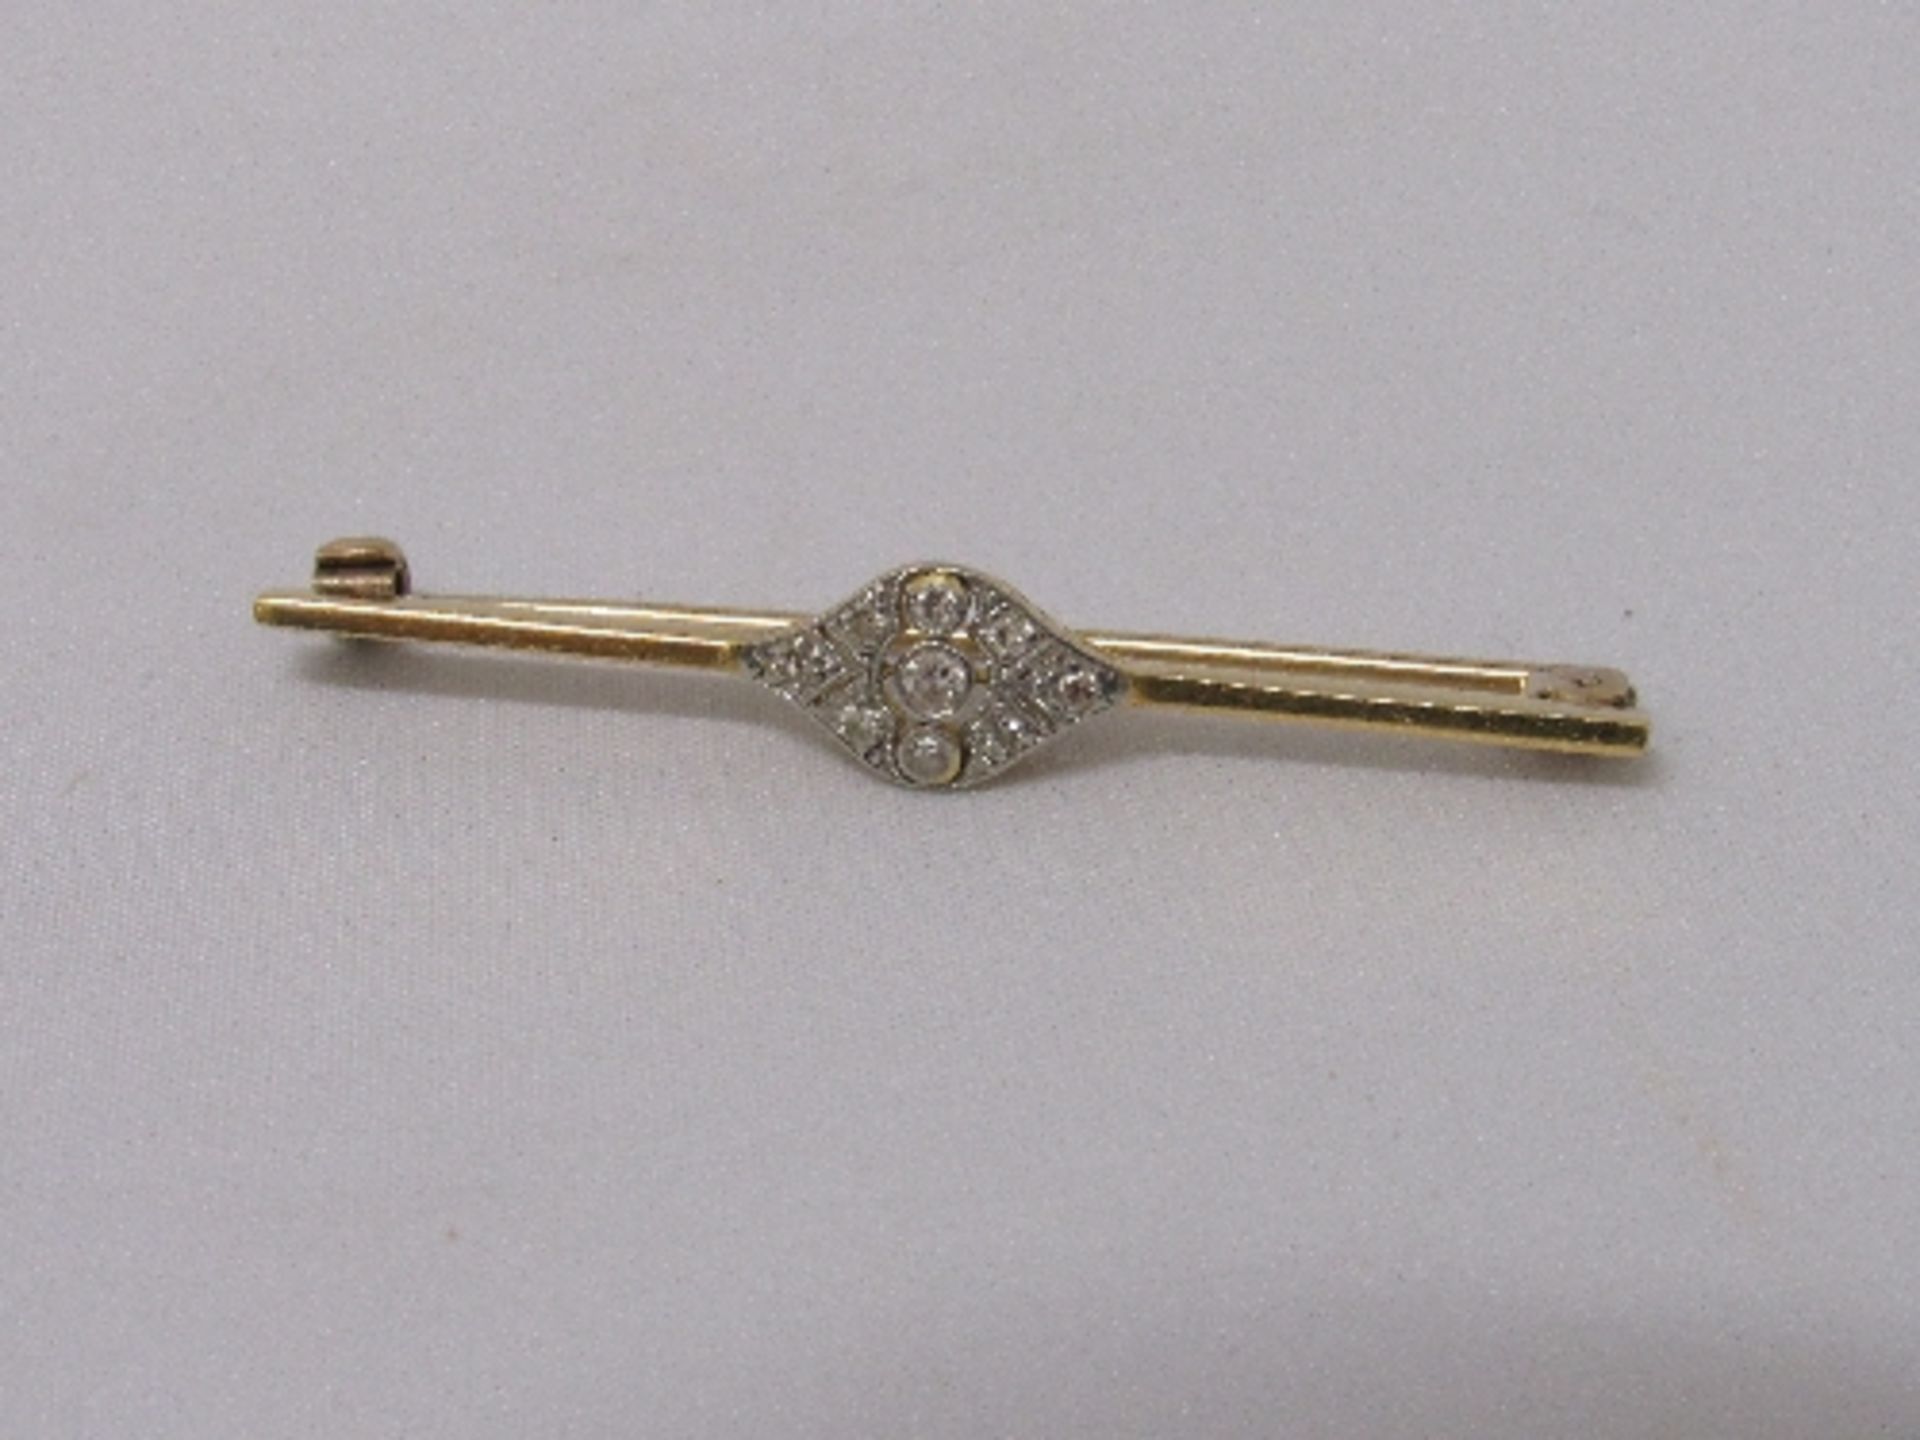 Diamond & gold coloured metal tie-pin, weight 3.9gms. Estimate £80-100.